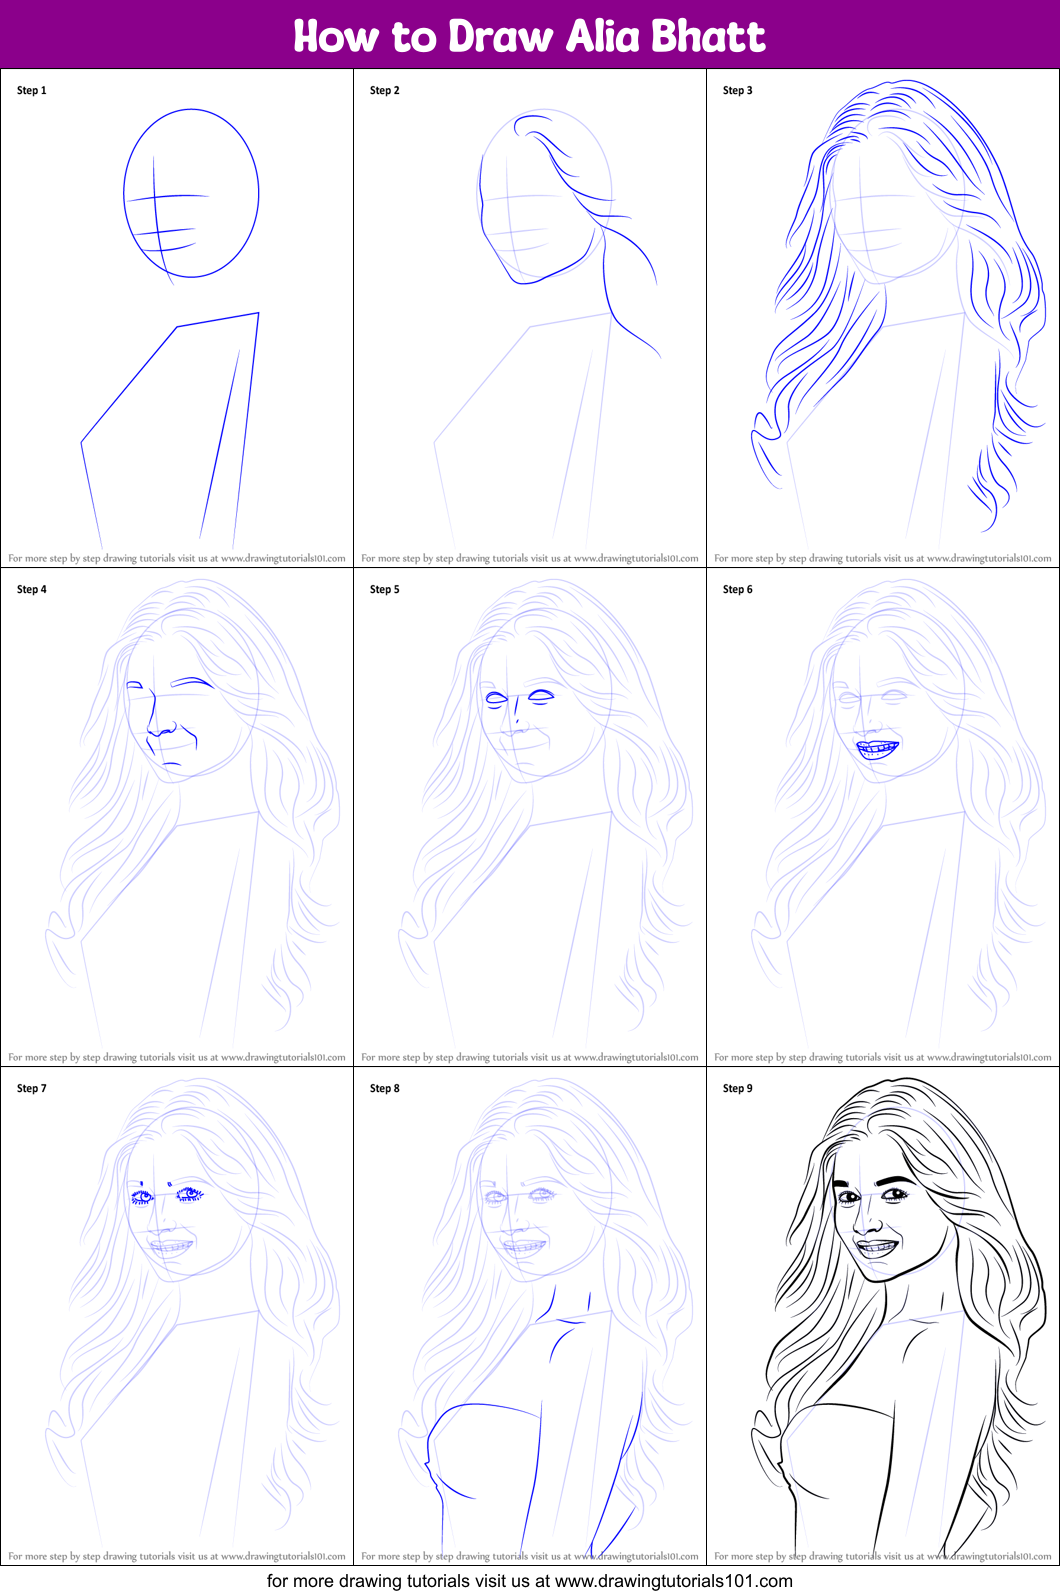 Ananya easy art - How to draw Alia bhatt sketch step by... | Facebook